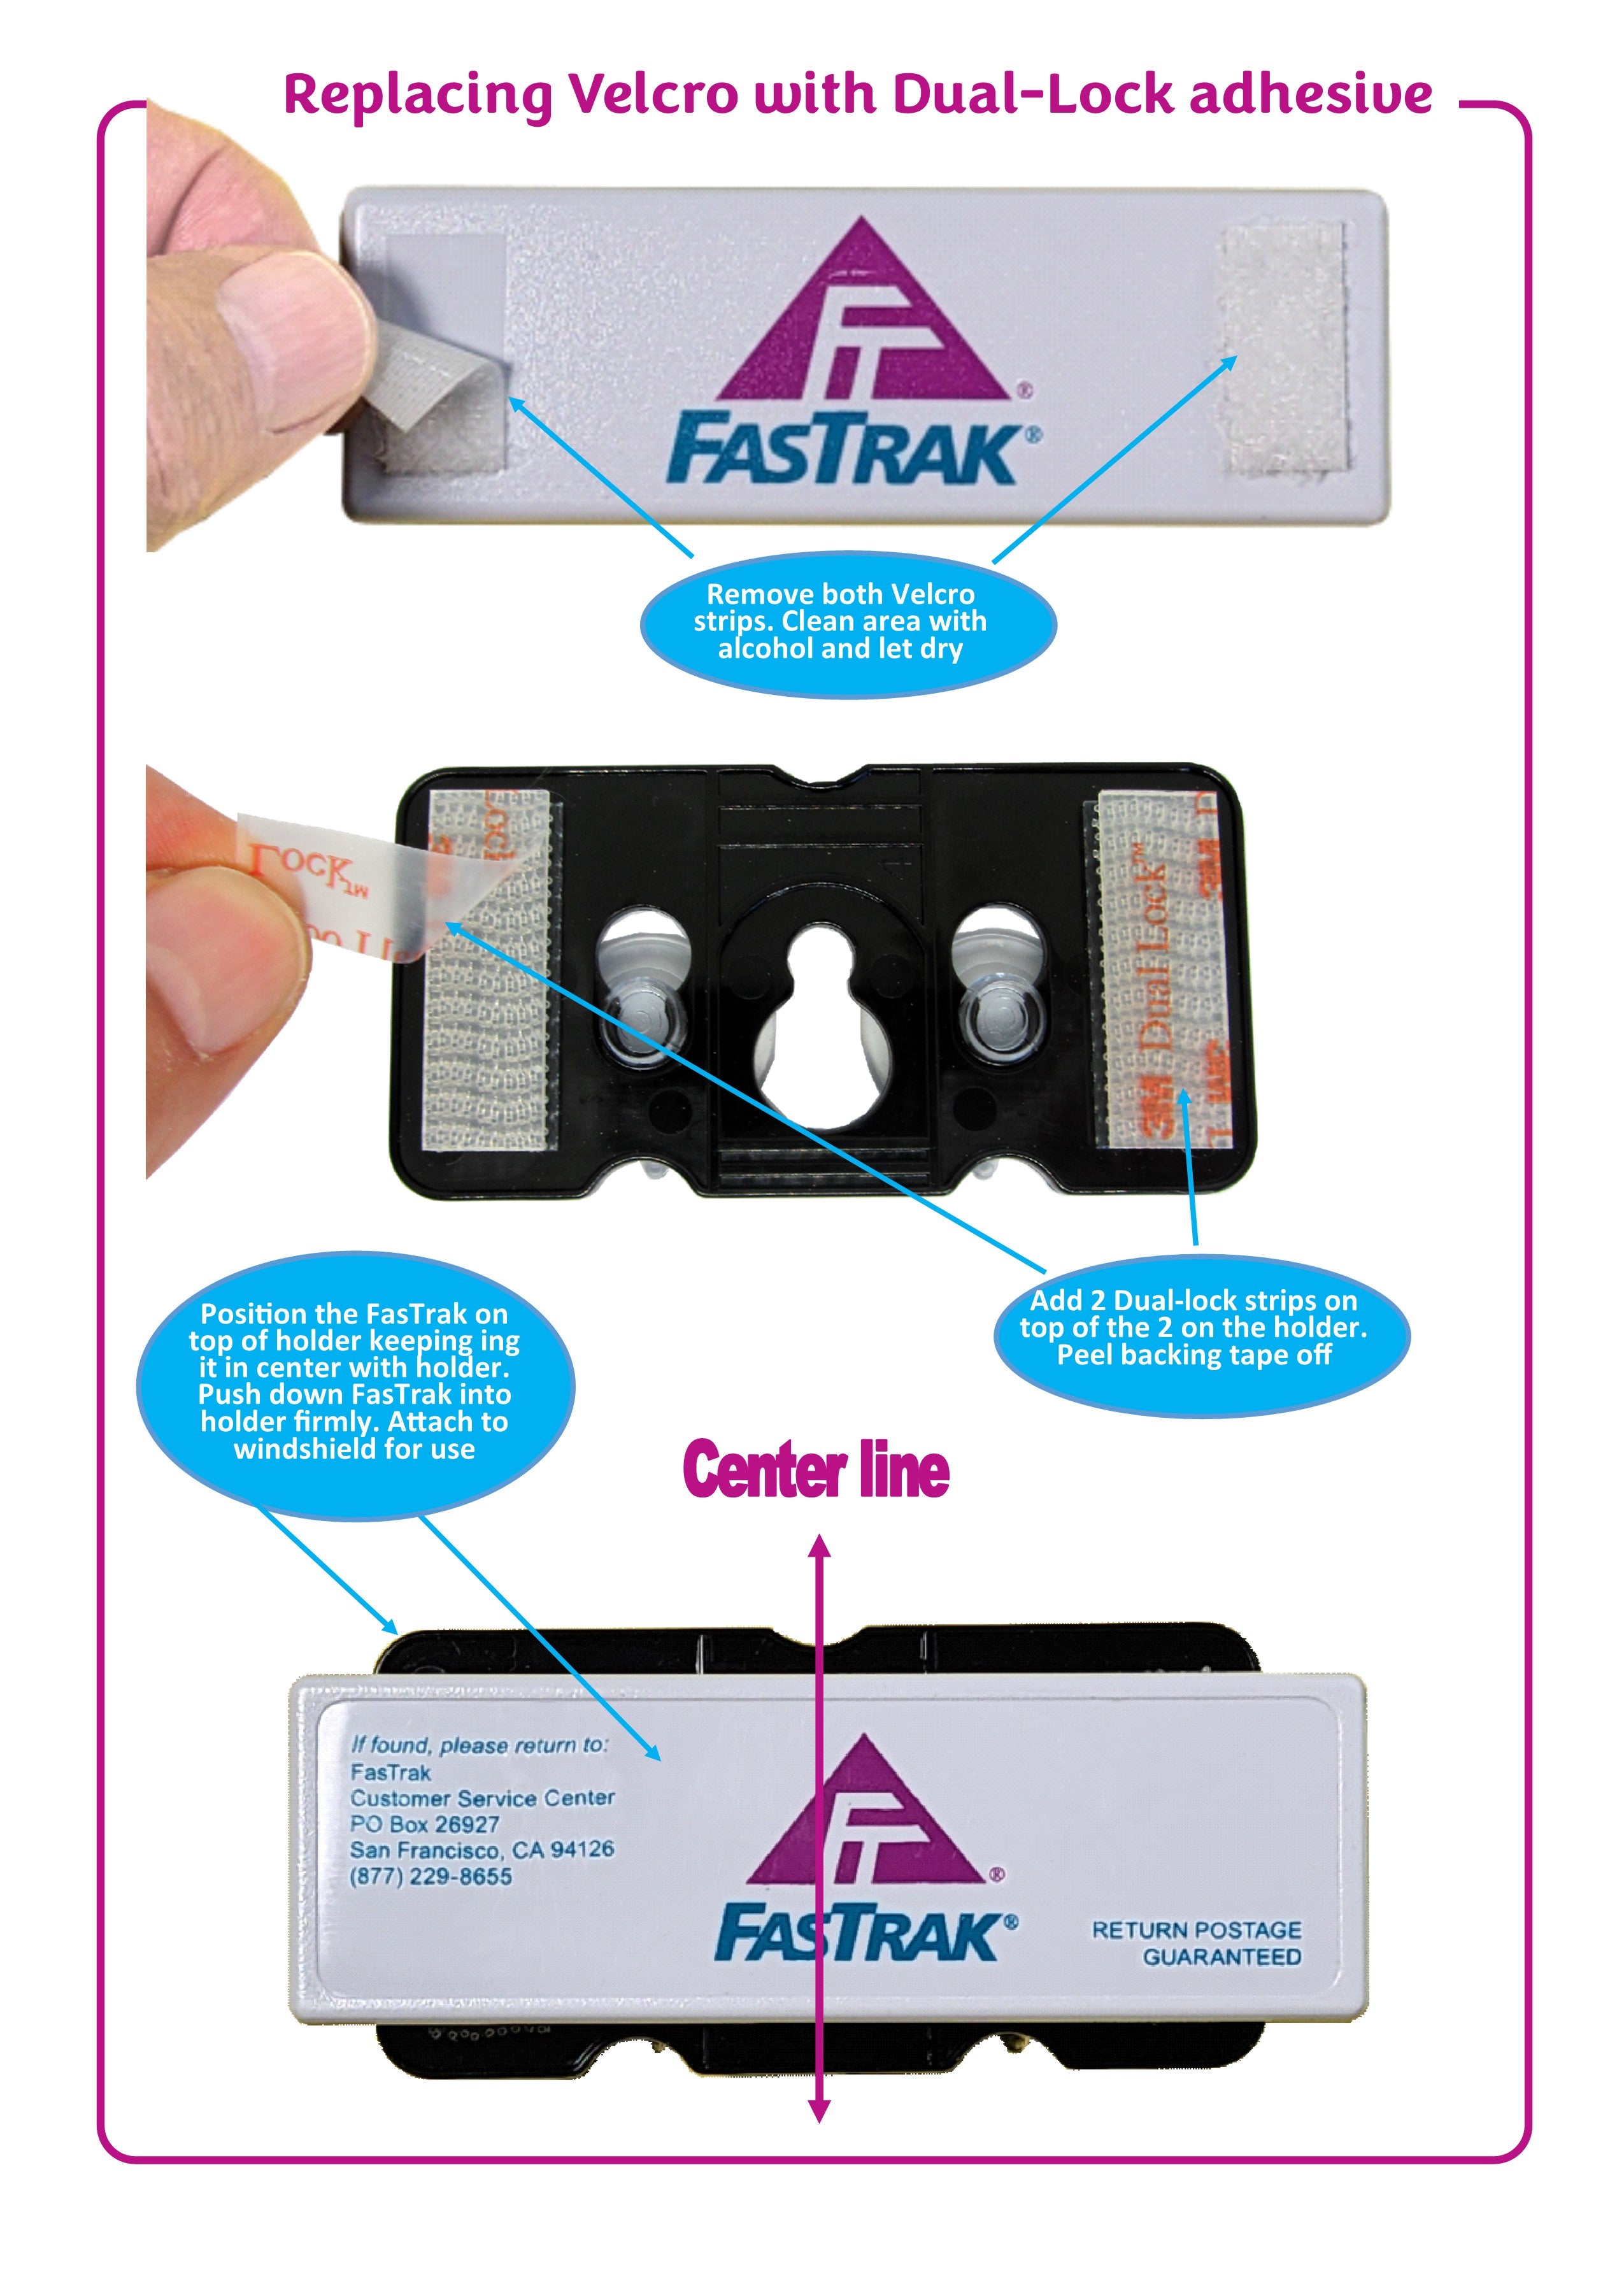 EZ Pass-Mate™ Black - Universal FasTrak Toll Pass Holder by JL Safety.